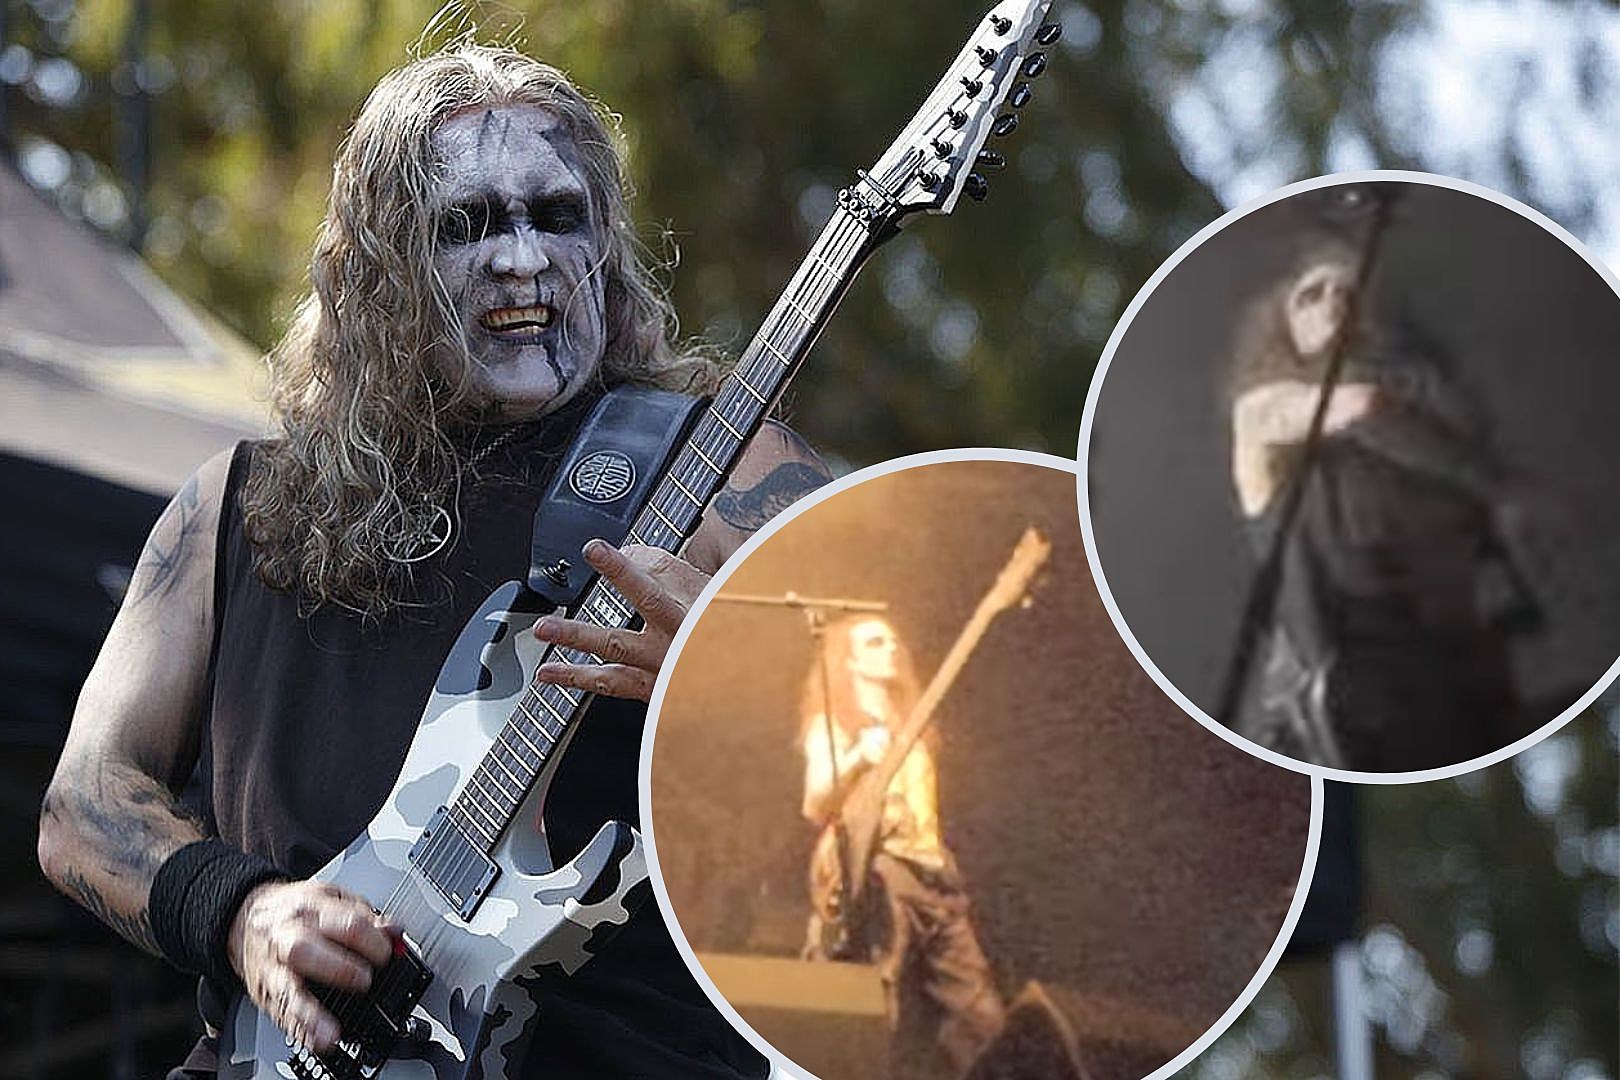 former Mayhem frontman Dead's skull fragment sold for $3,500